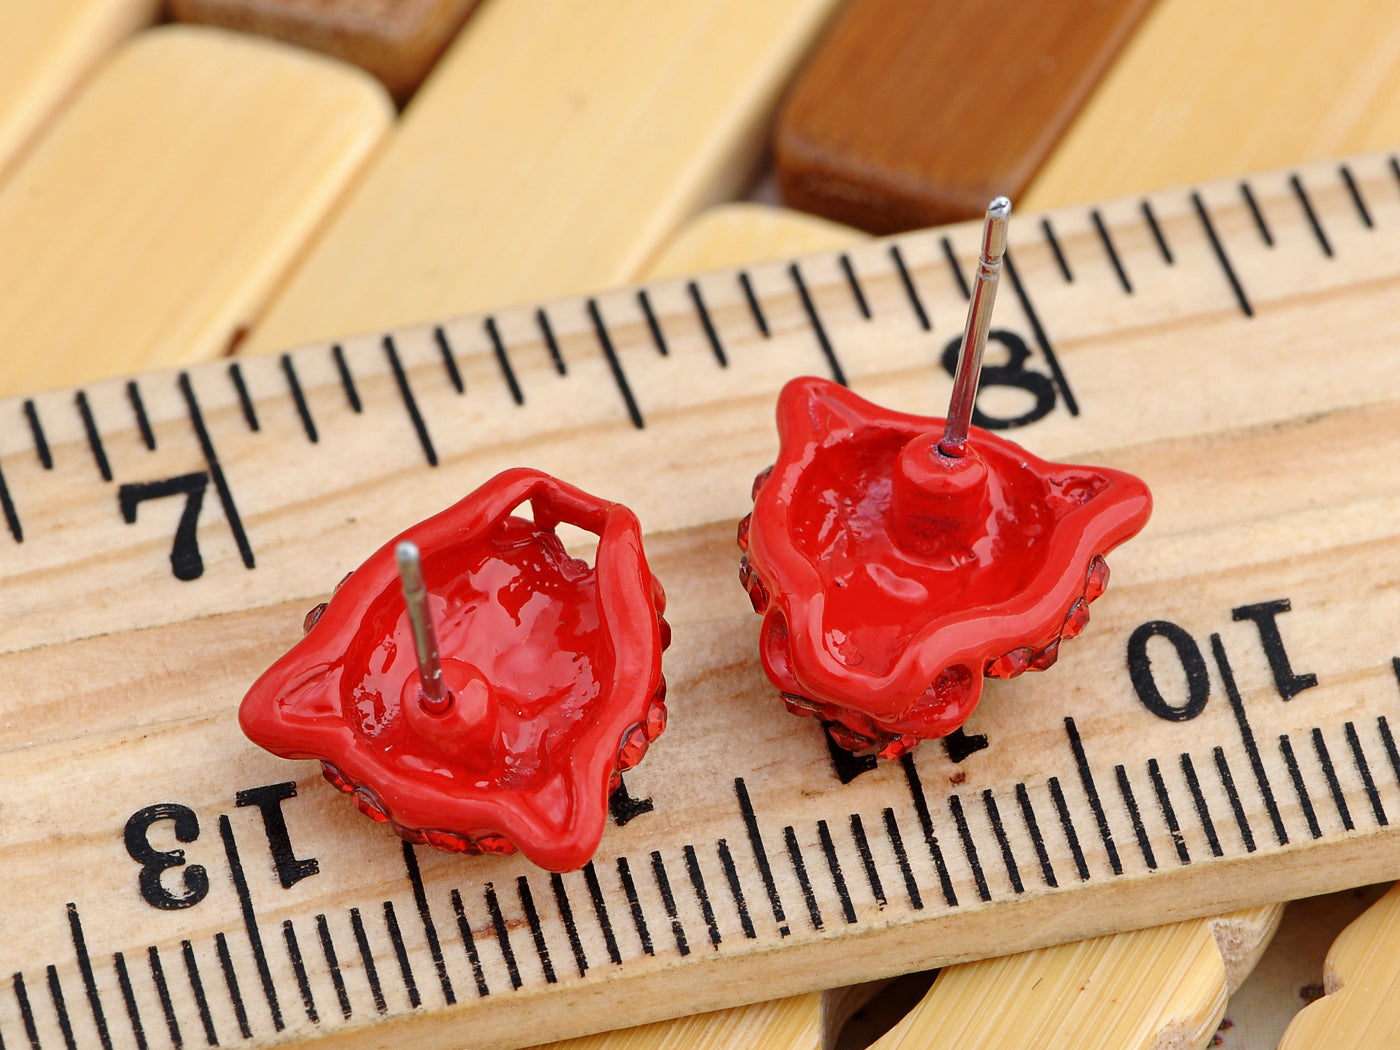 Red Colored Rare Demonic Devilish Jaguar Element Earrings